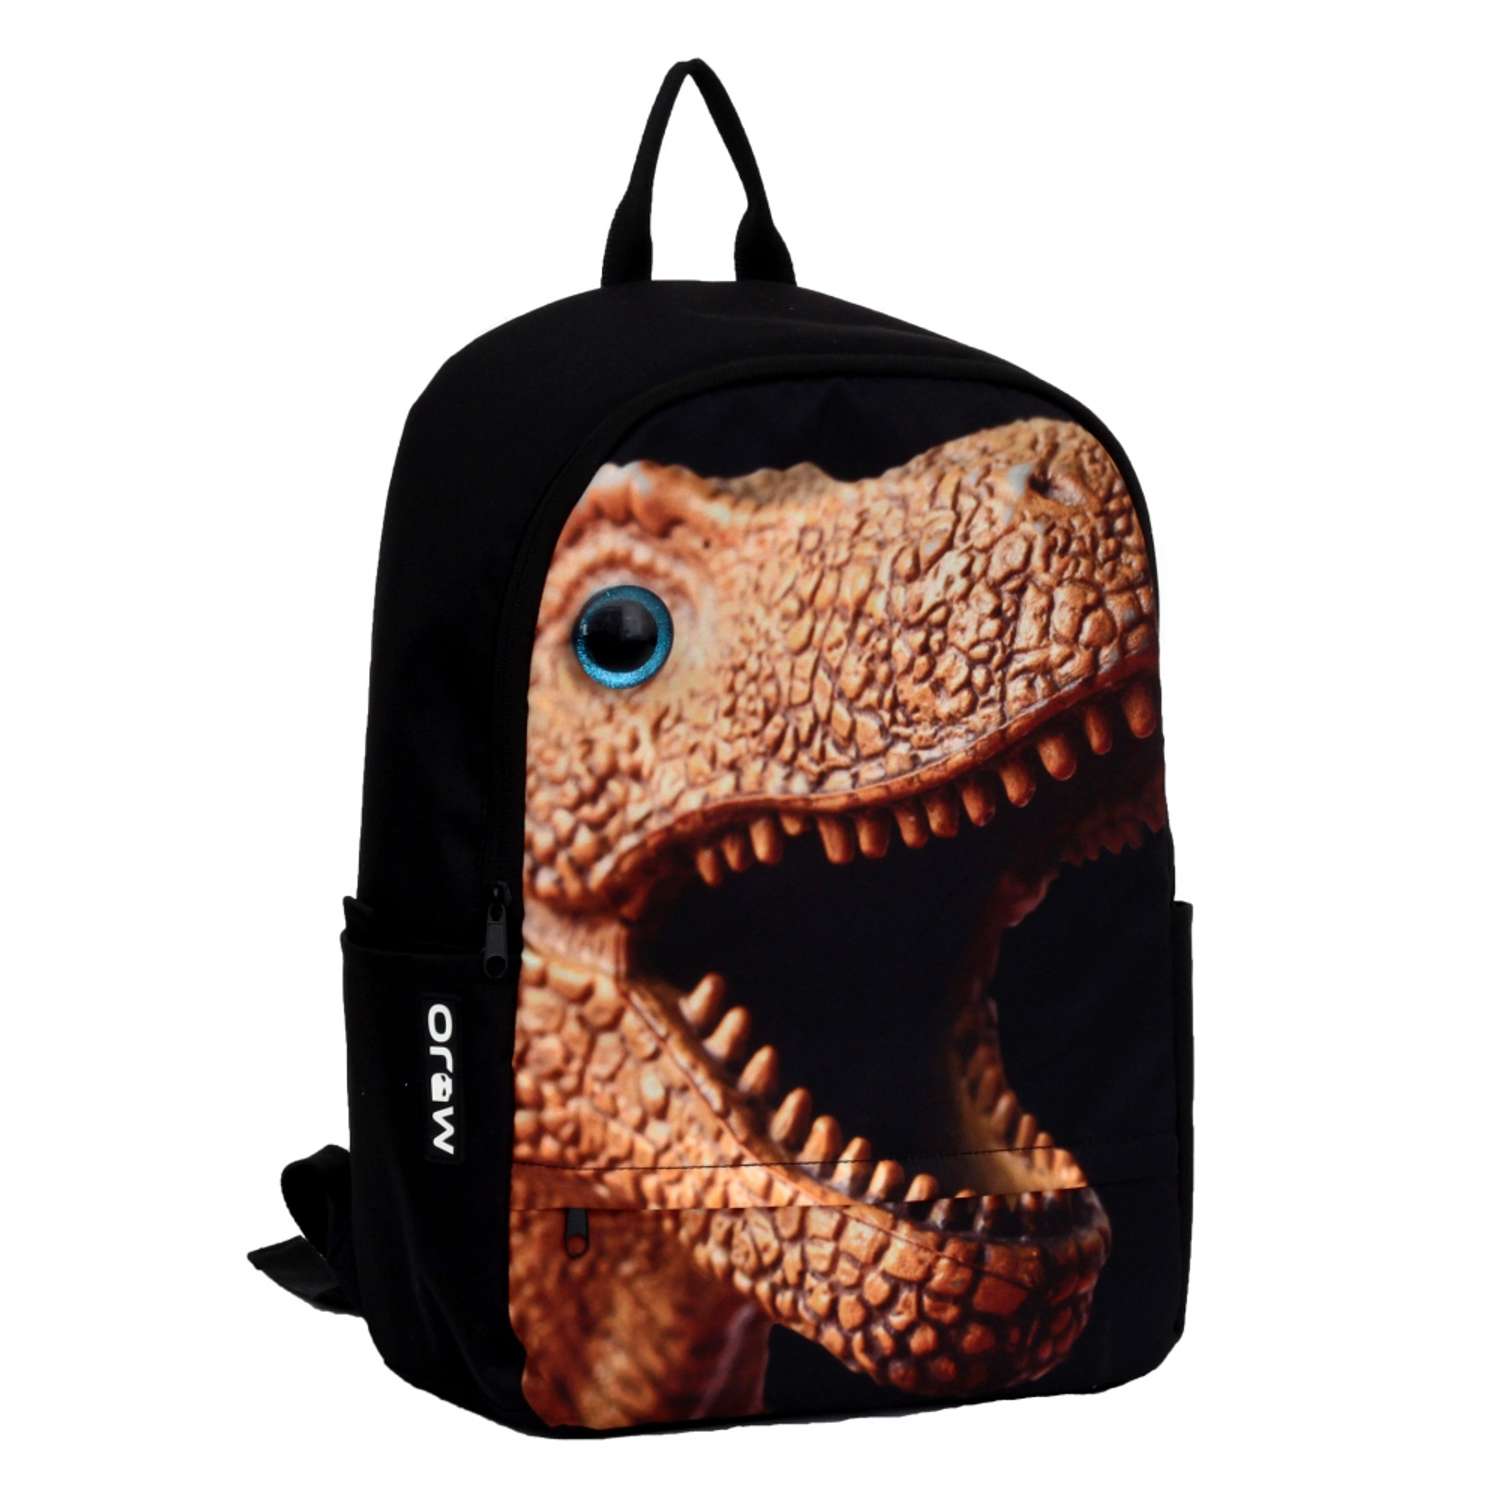 Рюкзак Mojo Pax Dino with 3D eye цвет черный - фото 2